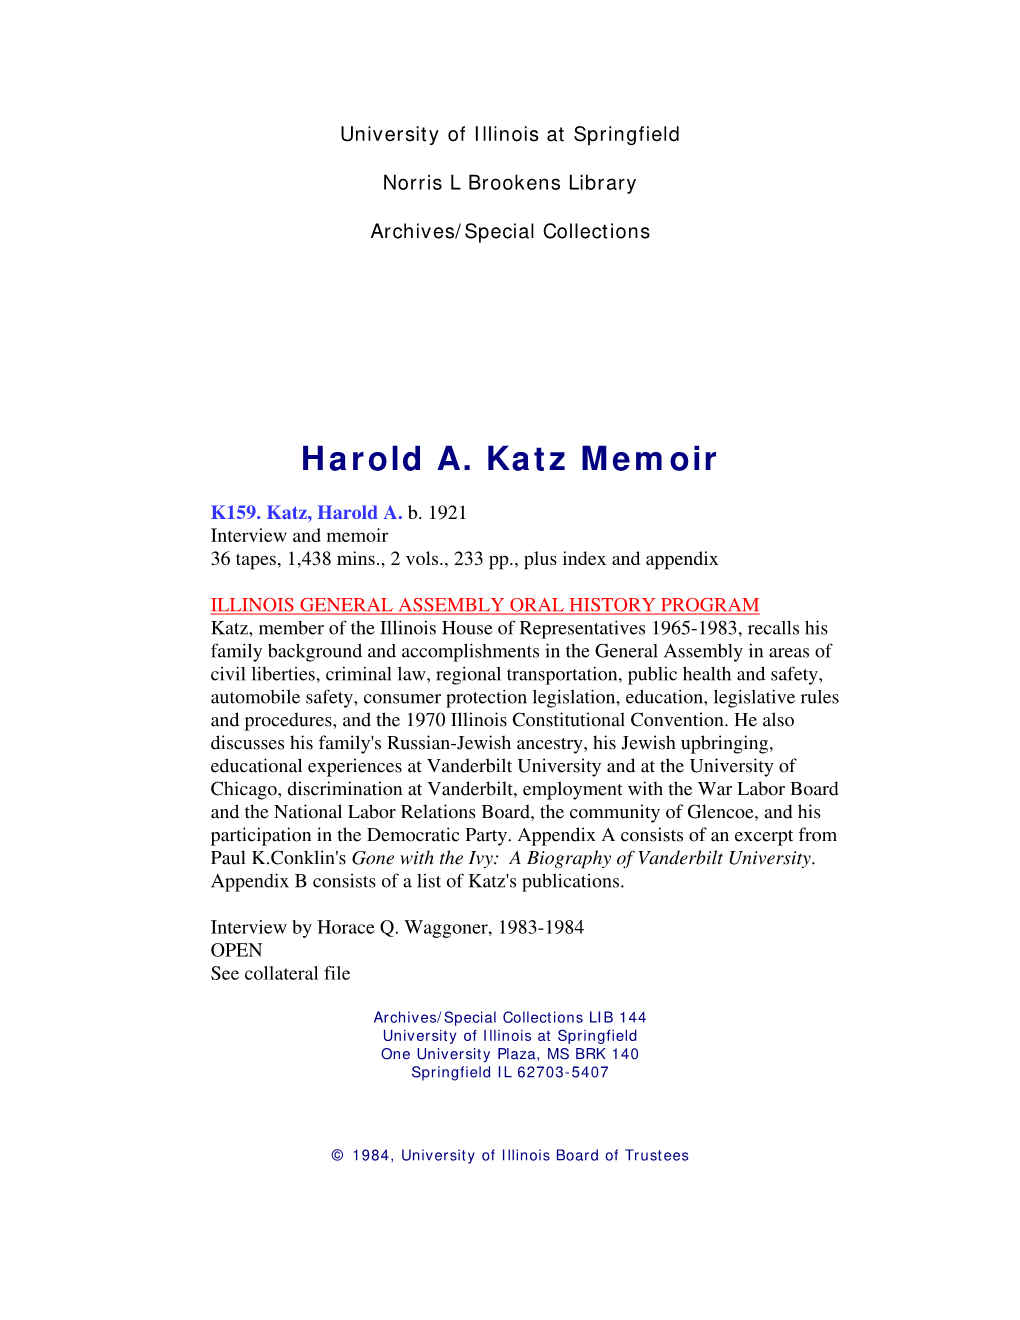 Harold A. Katz Memoir